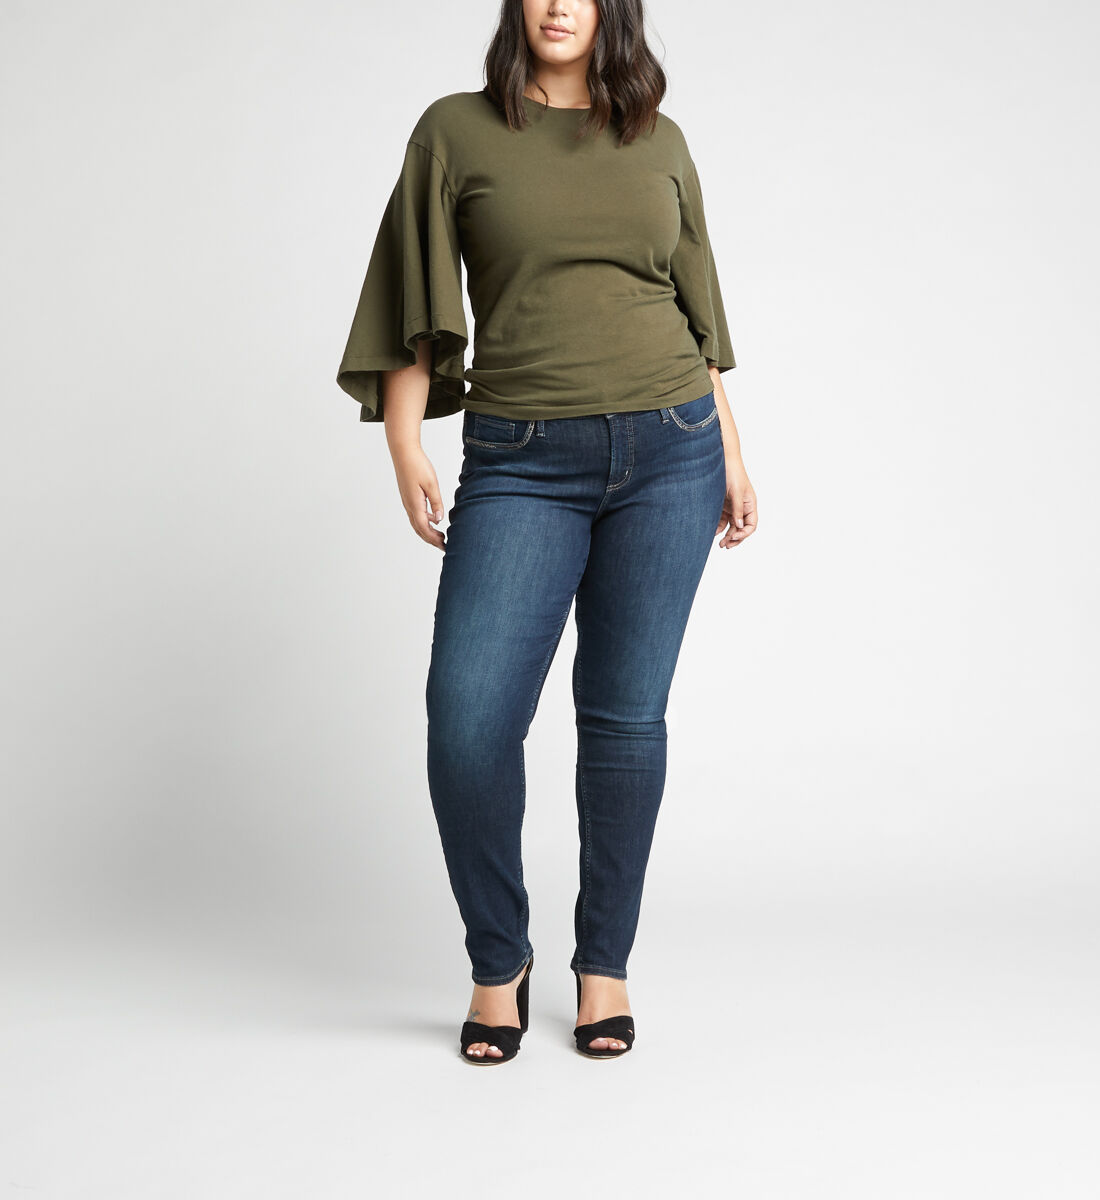 Elyse Mid Rise Straight Jeans Plus Size,Indigo Alt Image 1